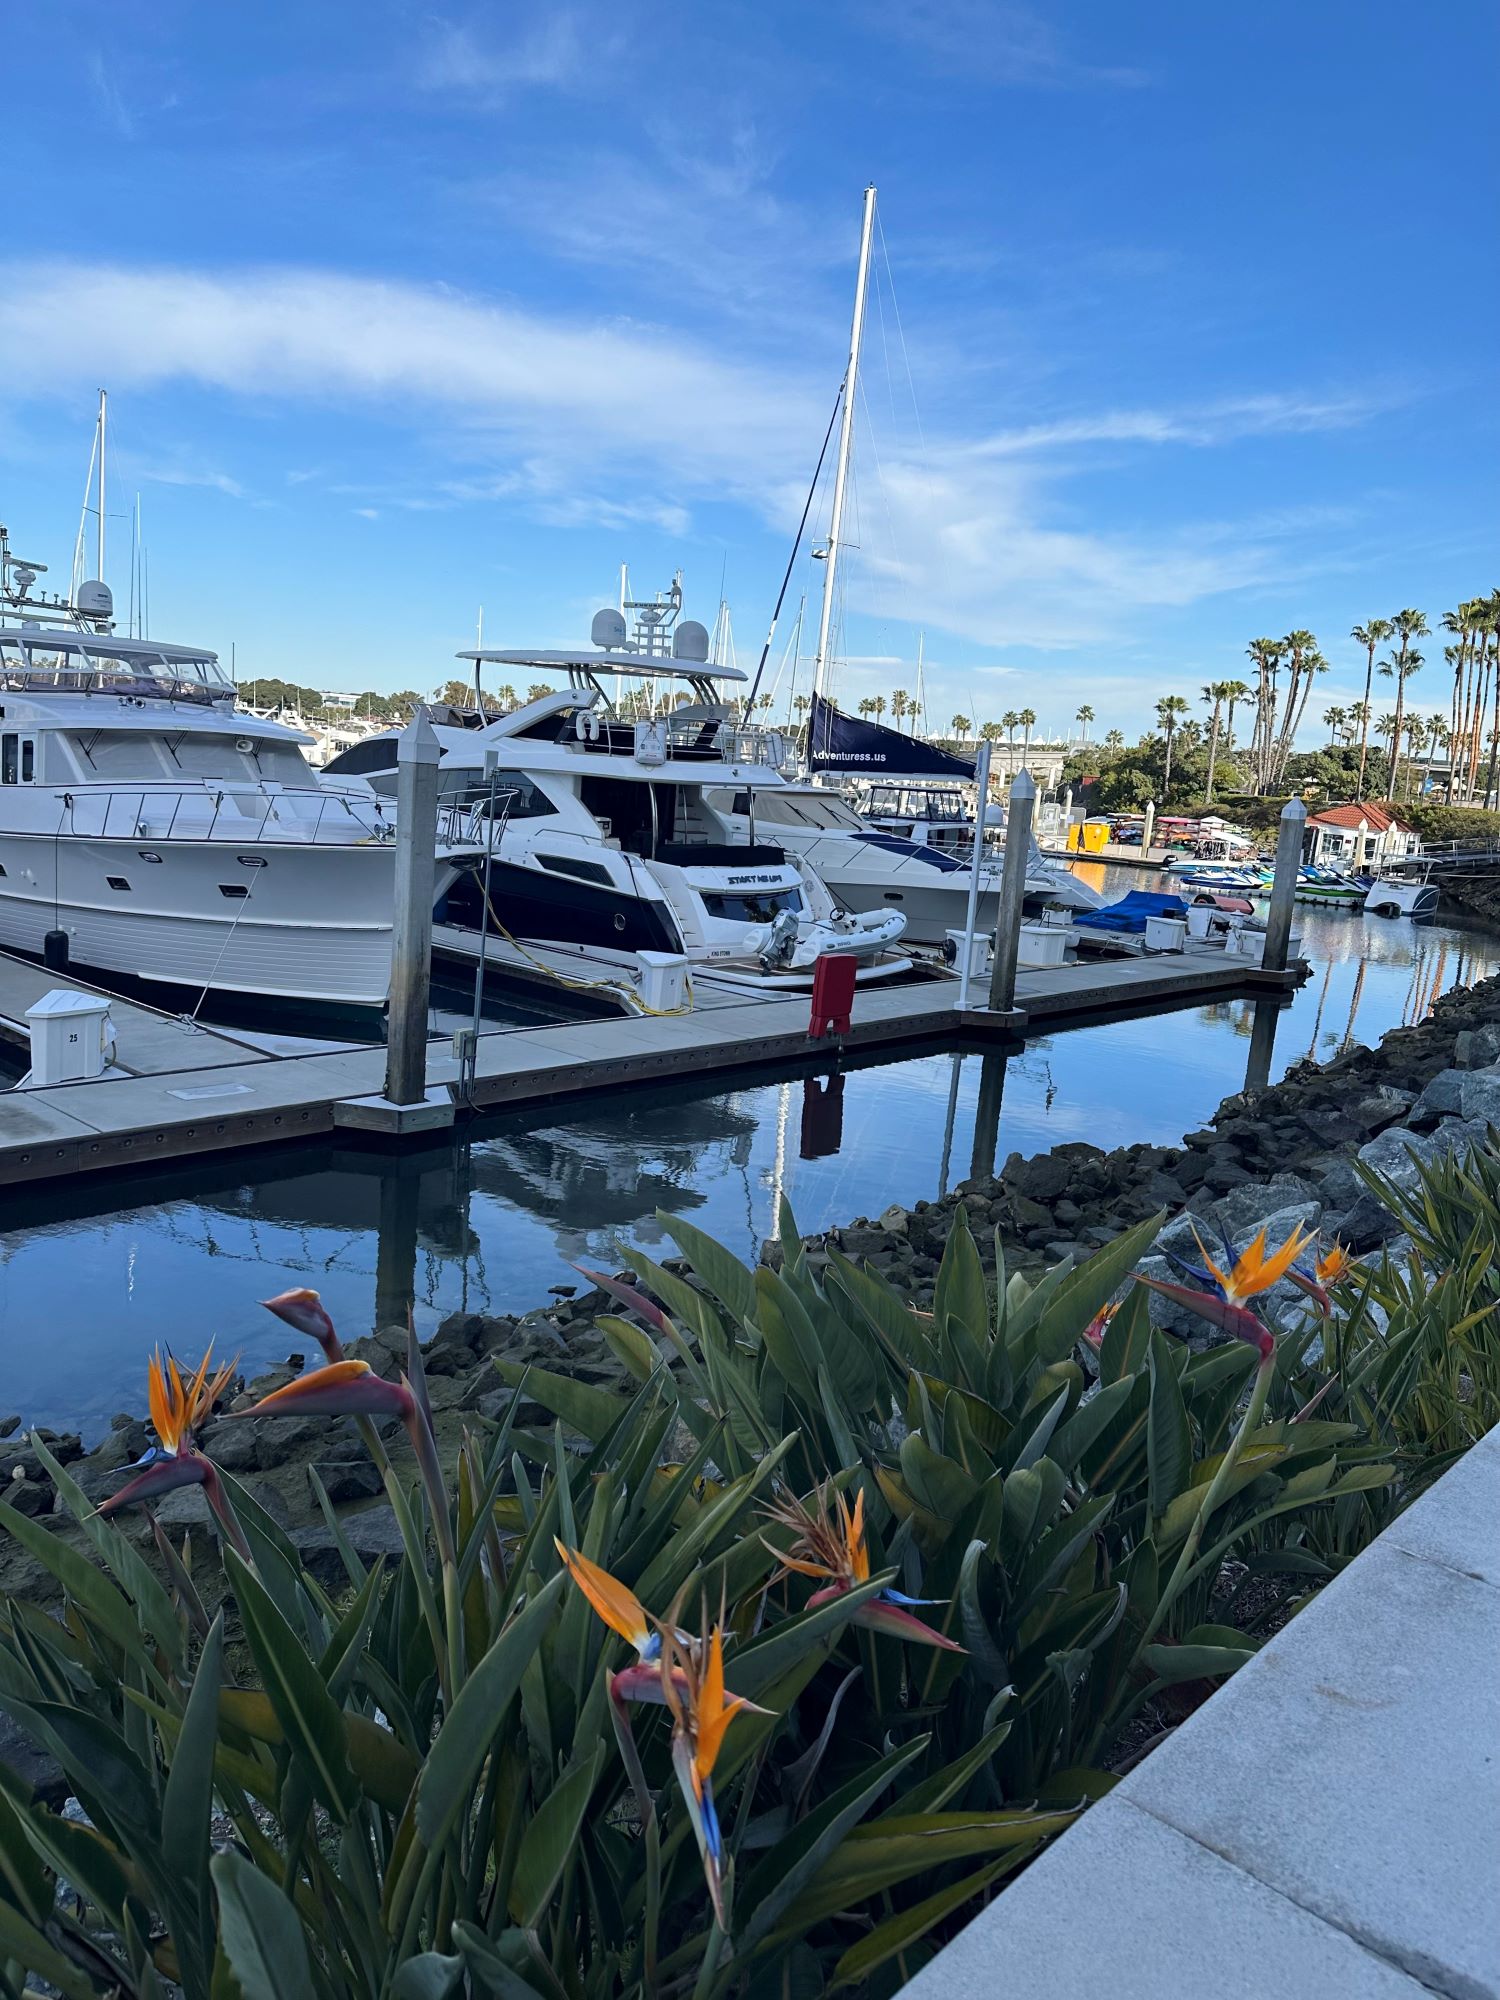 An image of the marina at the Sheraton San Diego Hotel & Marina.